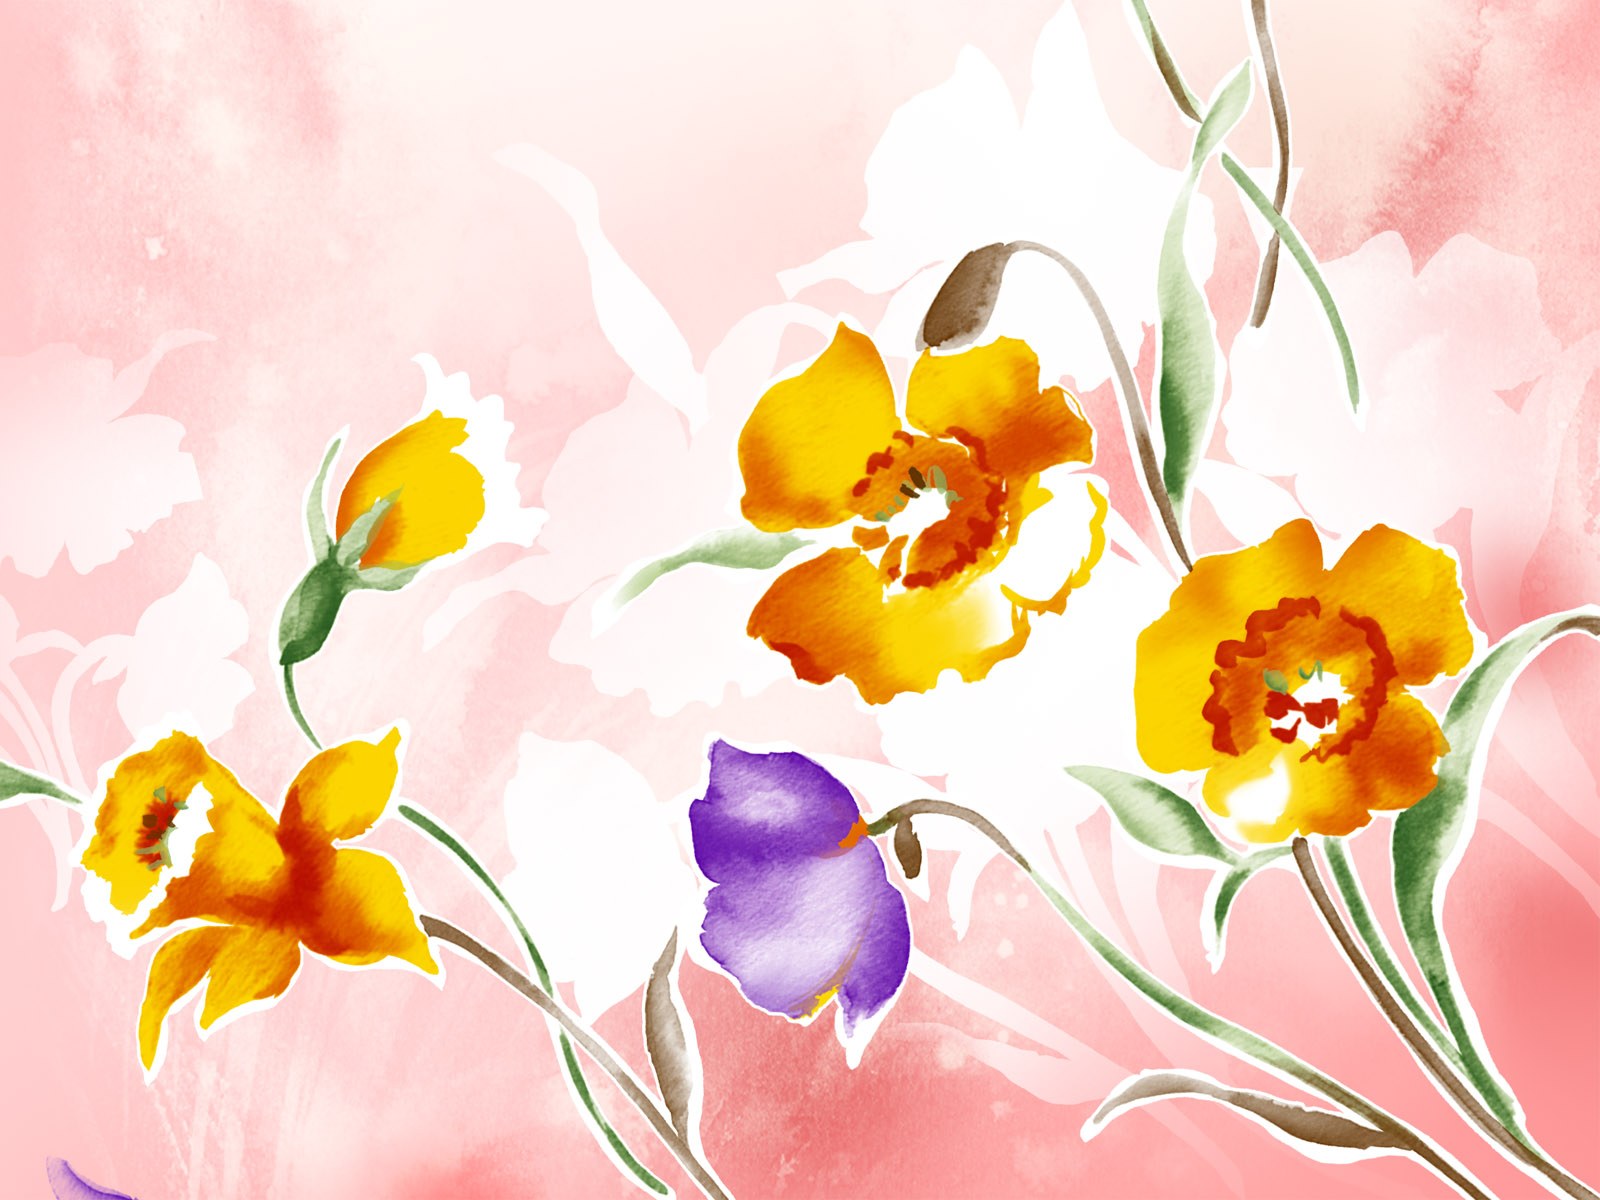 Flower Design Wallpaper HD In Vector N Designs